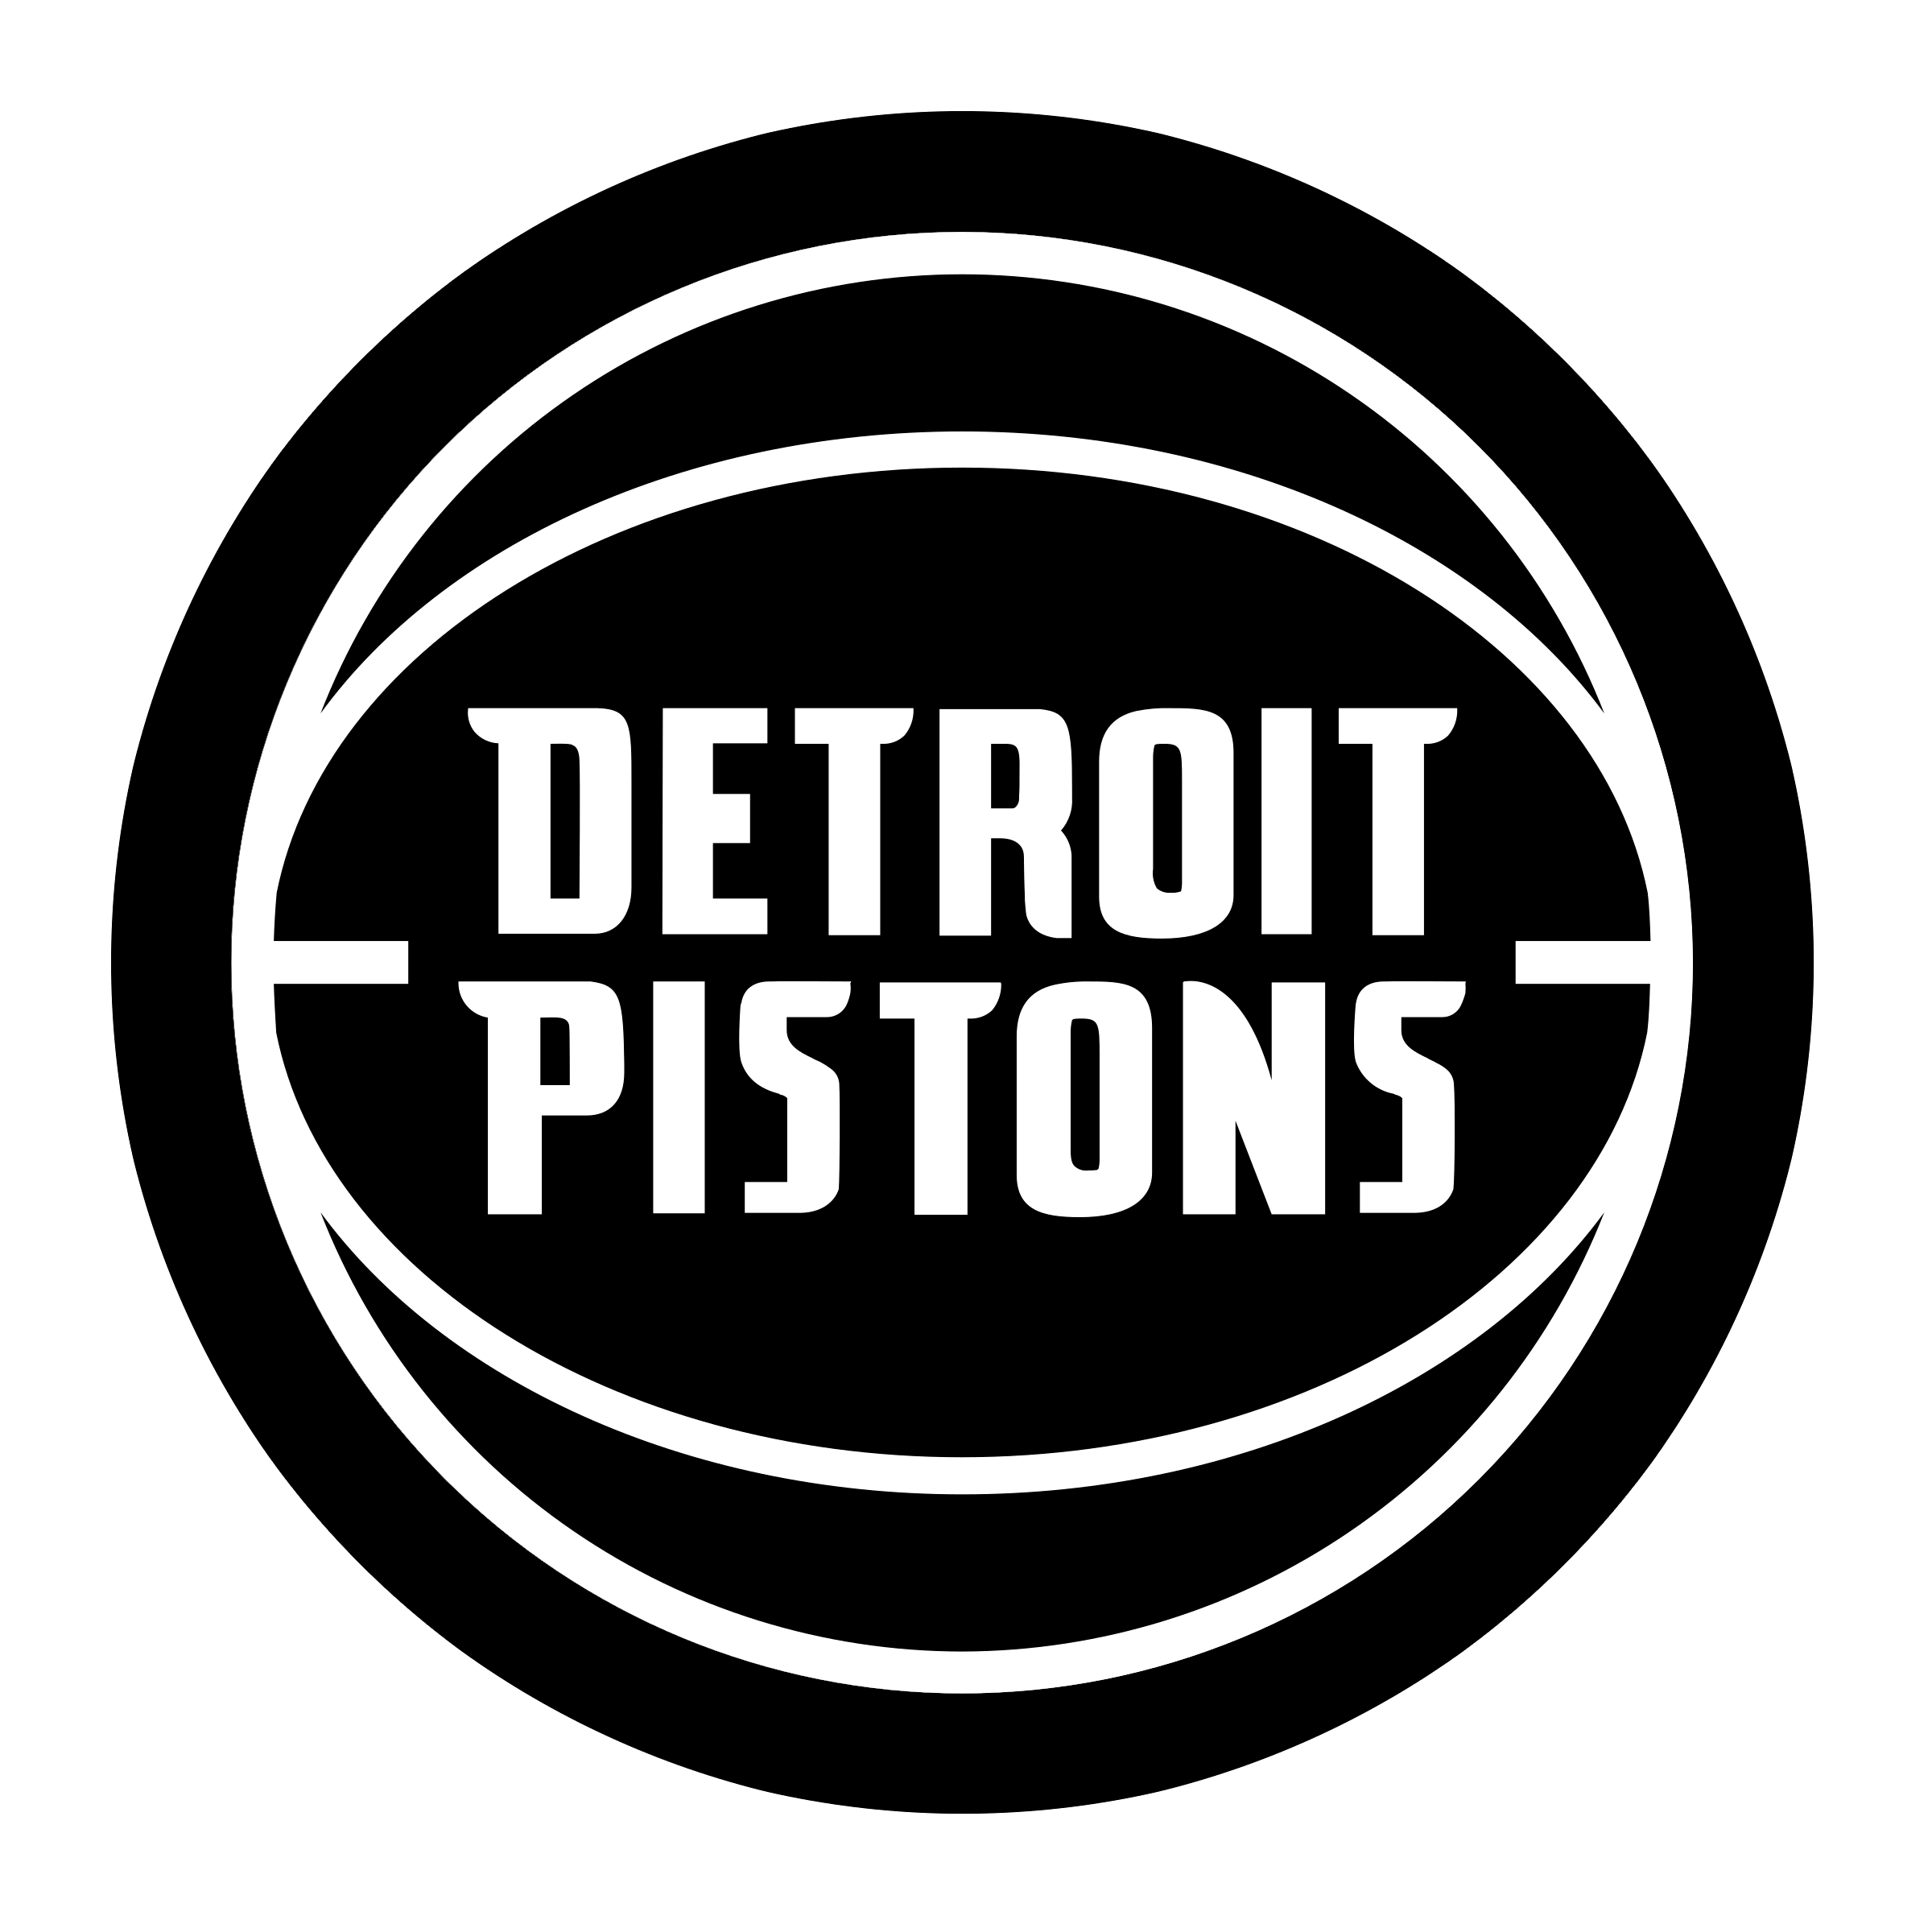 Detroit Pistons Logo - Detroit Pistons Logo PNG Transparent & SVG Vector - Freebie Supply